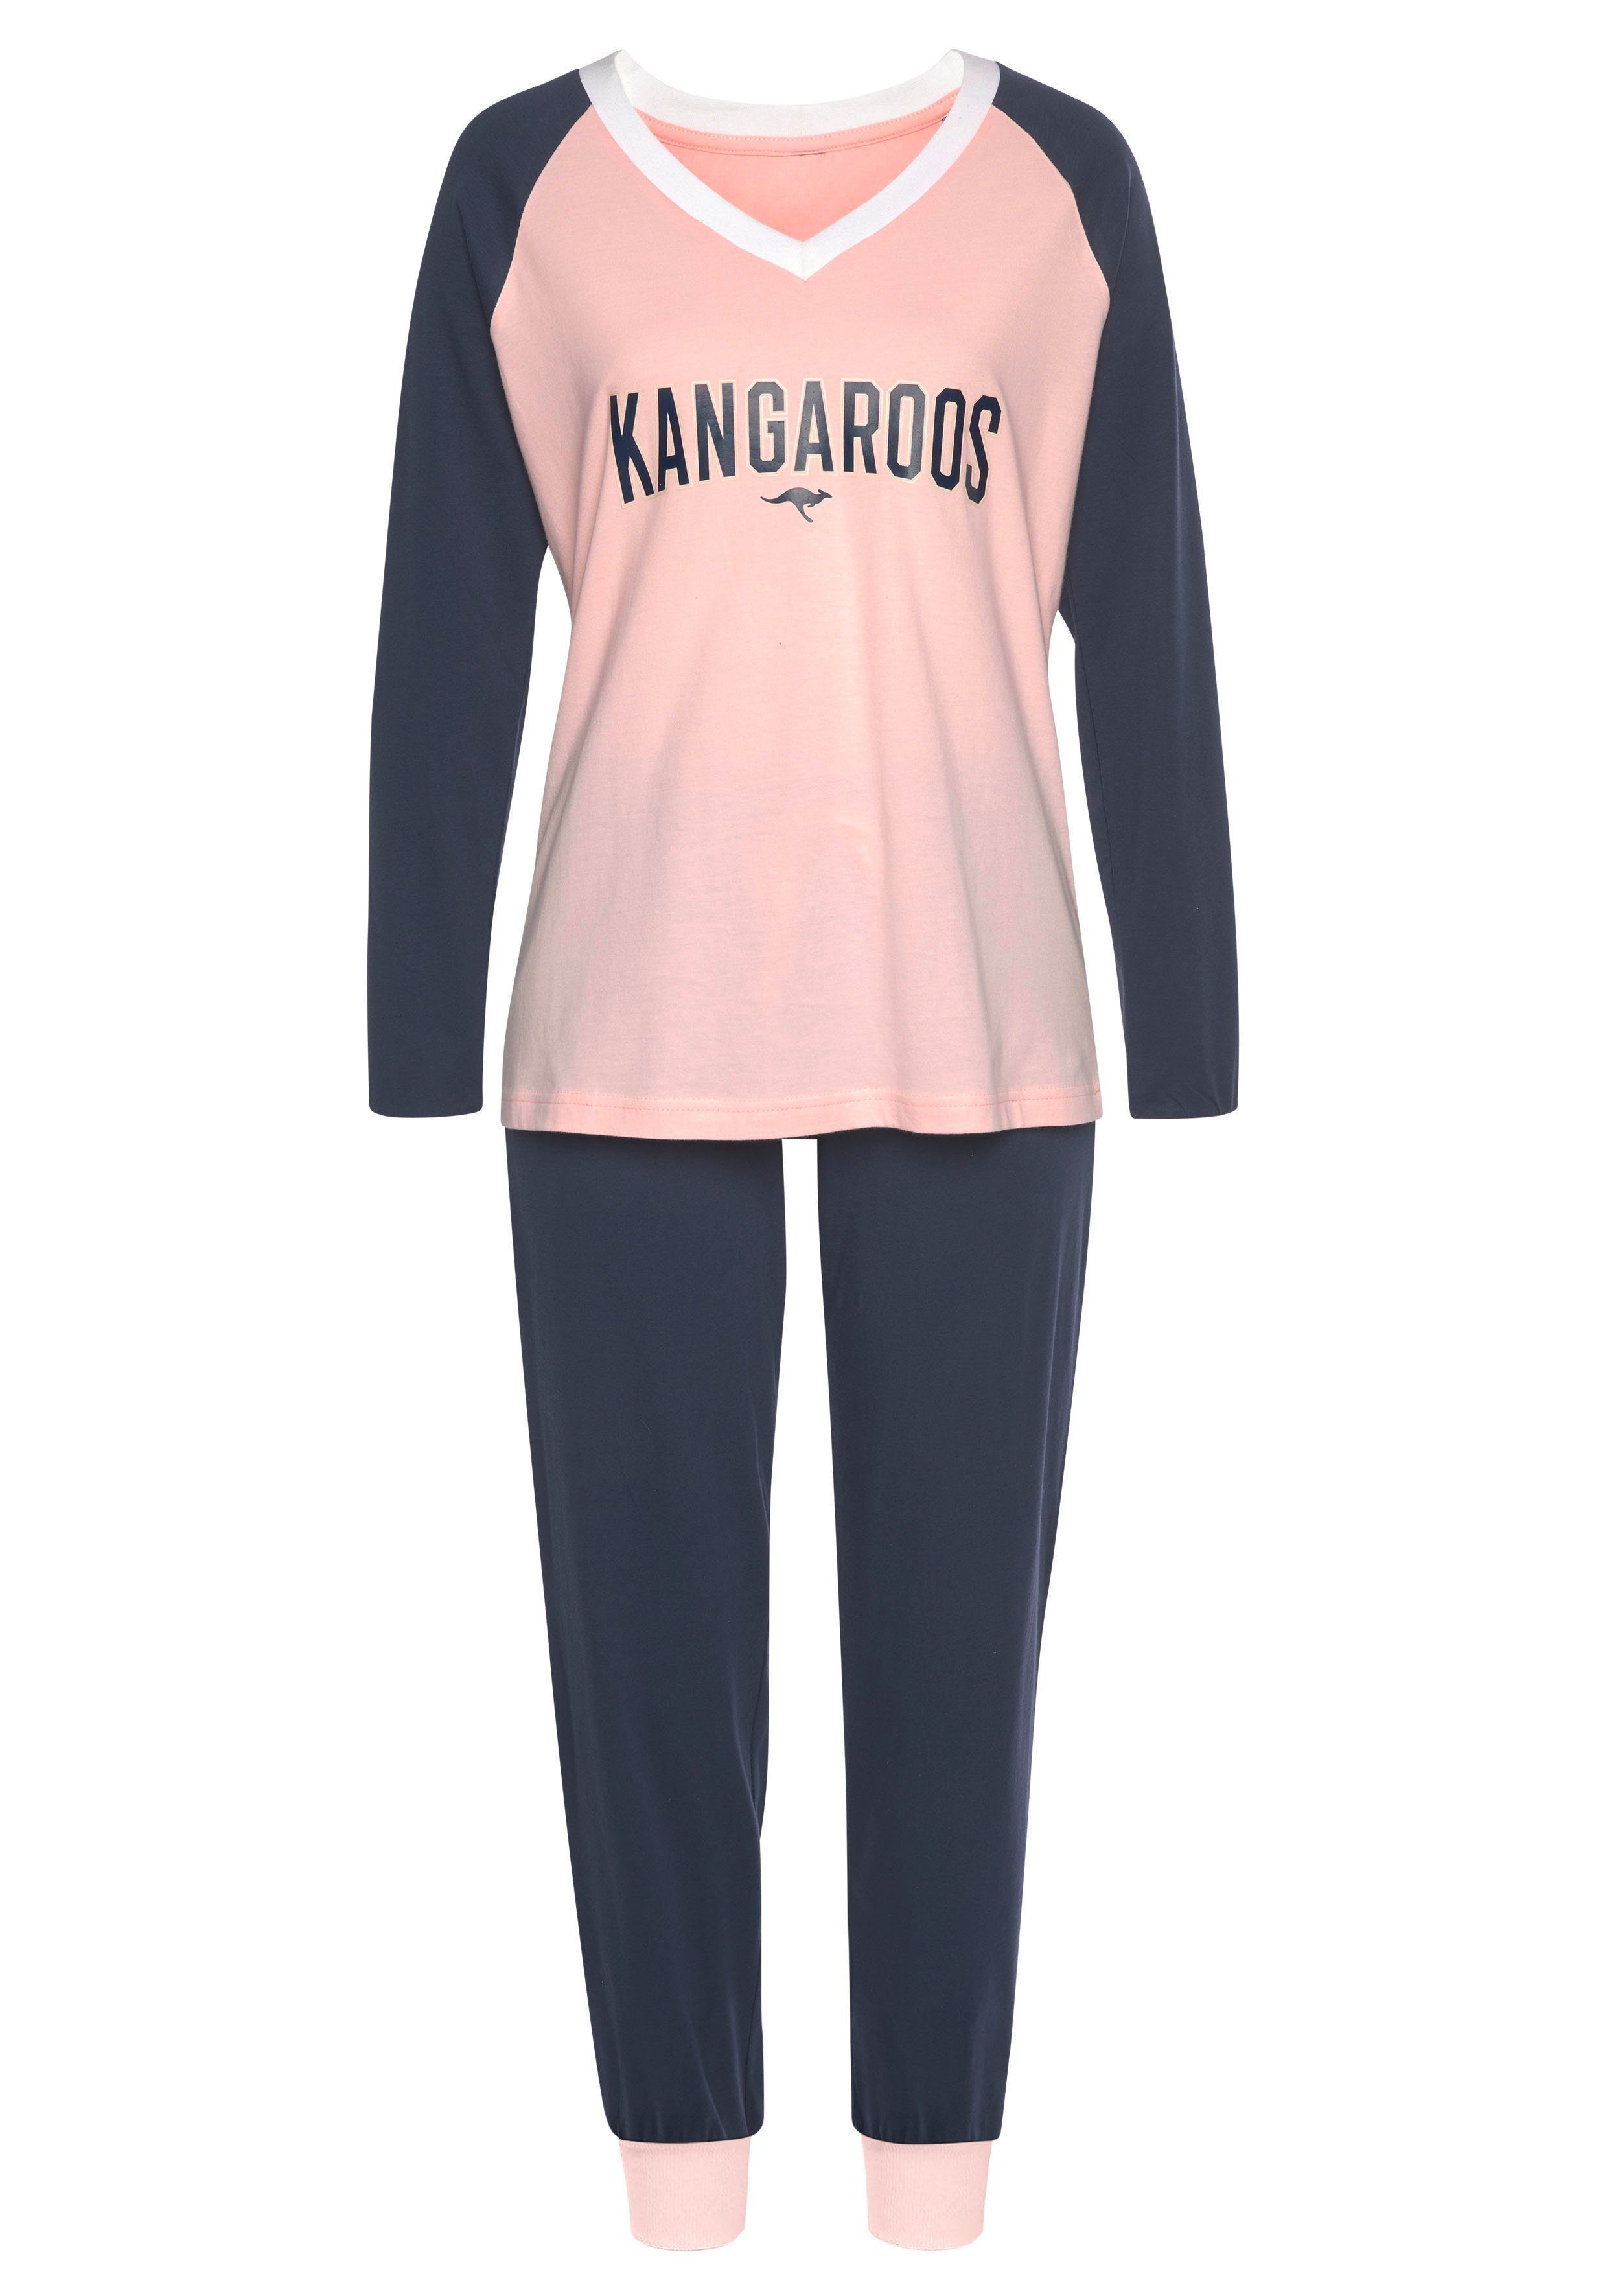 rosa-dunkelblau kontrastfarbenen tlg., 1 KangaROOS Stück) Pyjama (2 Raglanärmeln mit